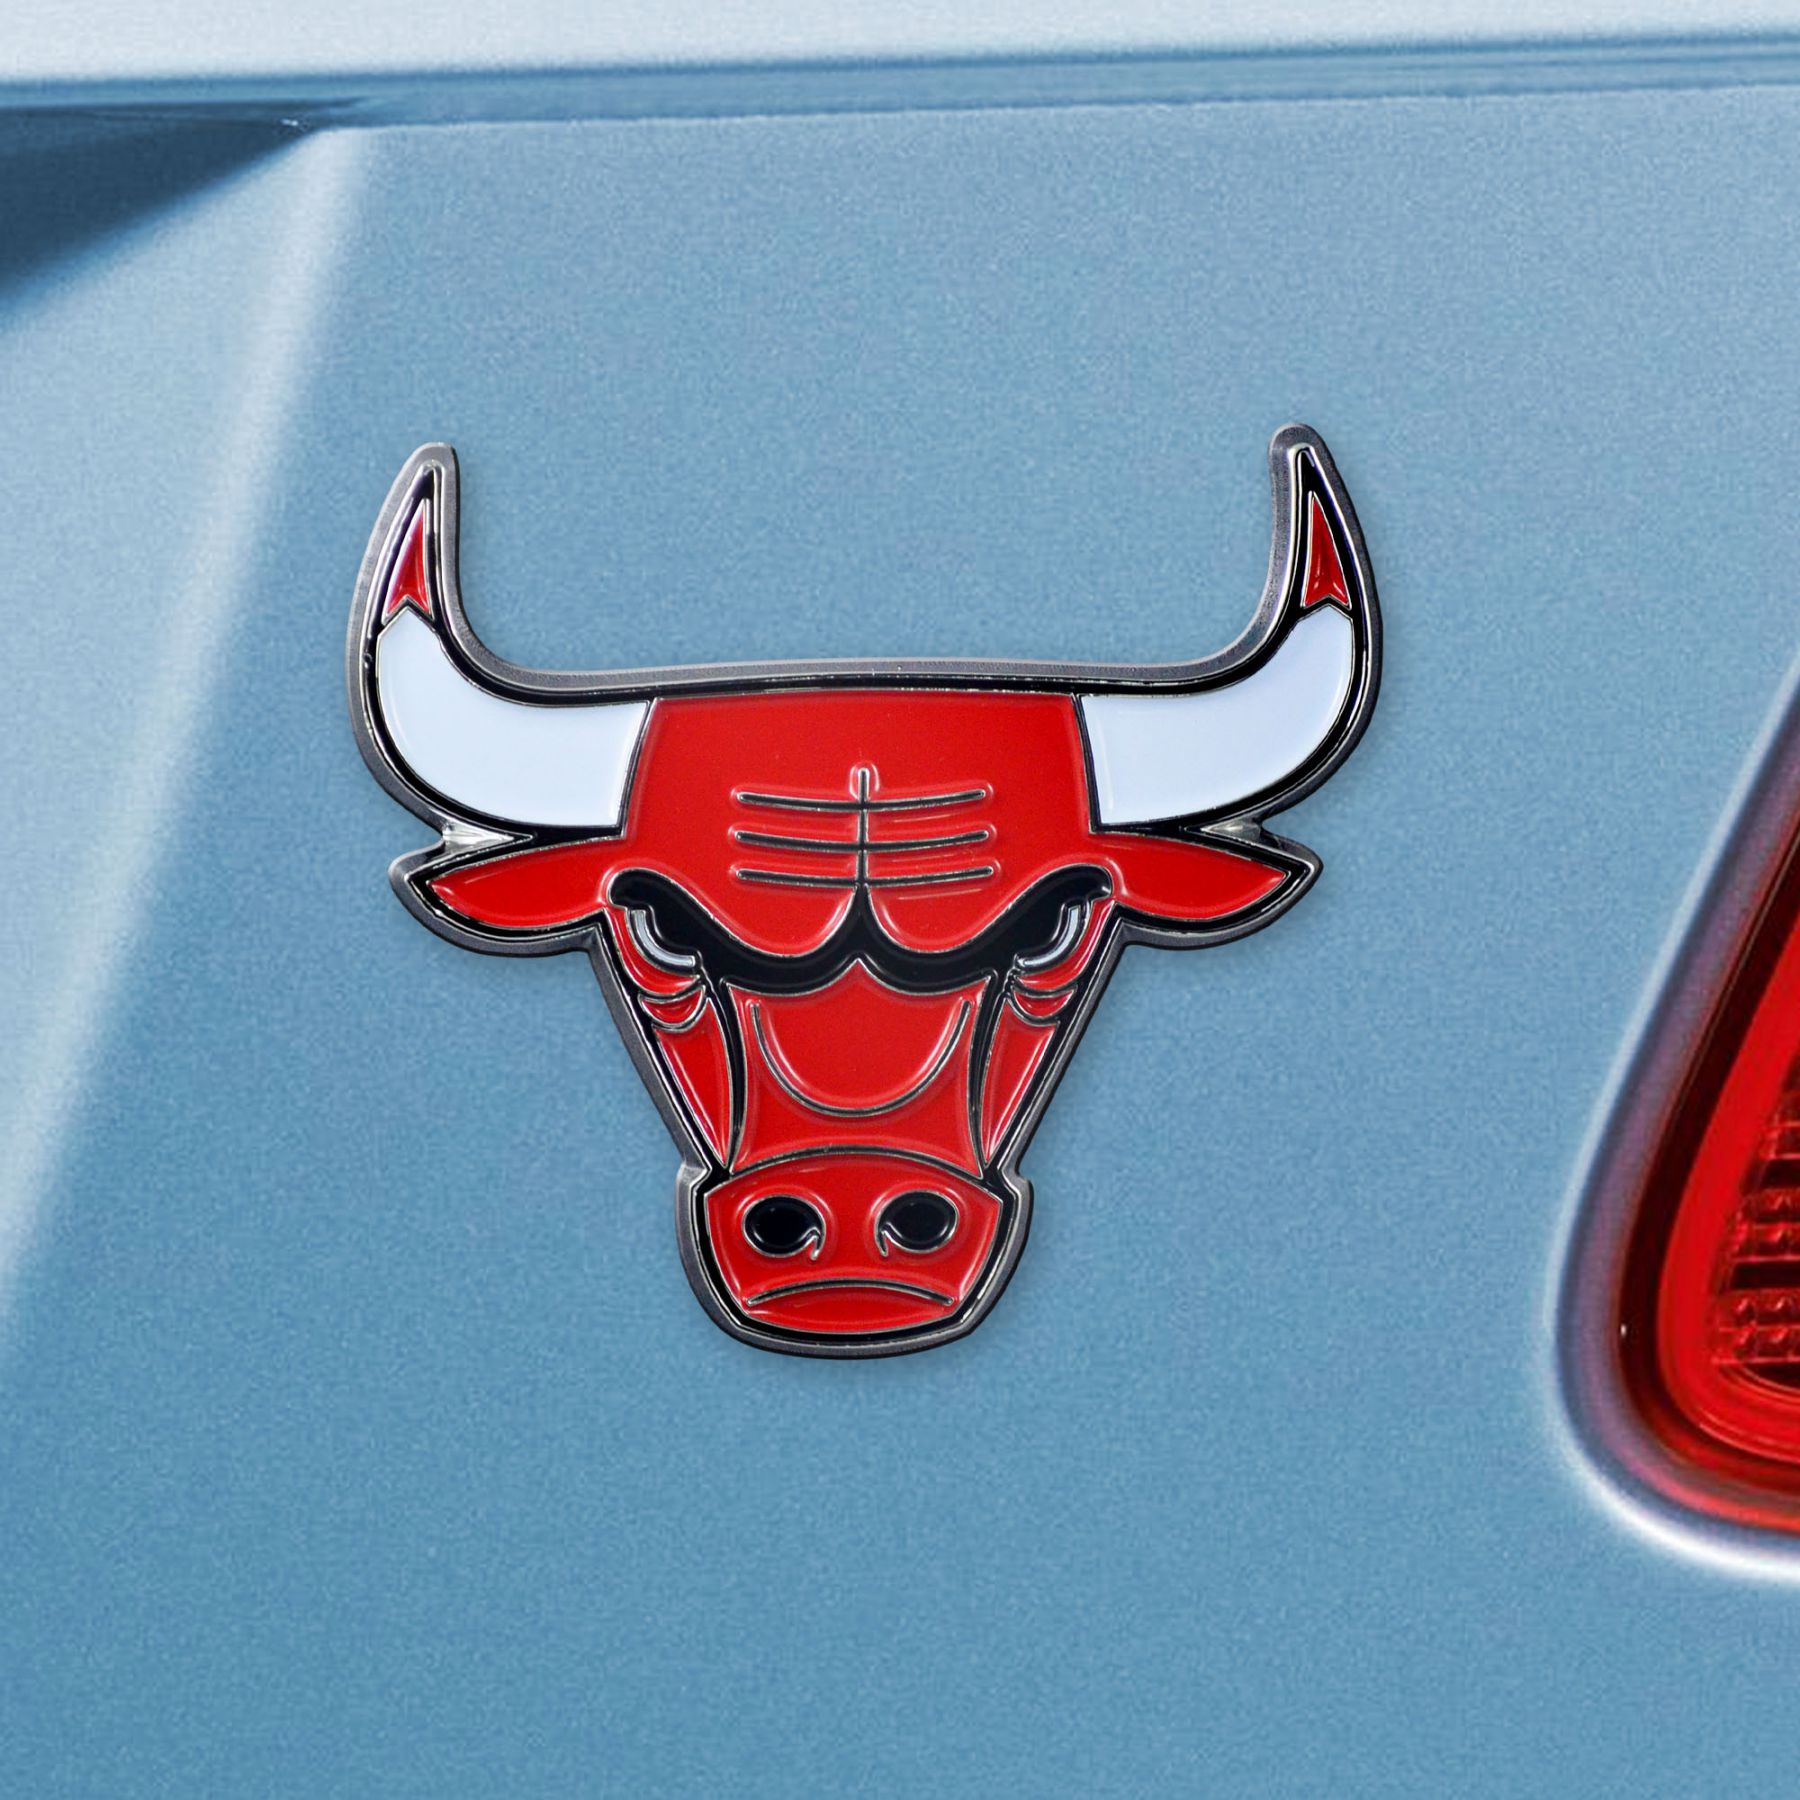 Bull car emblem